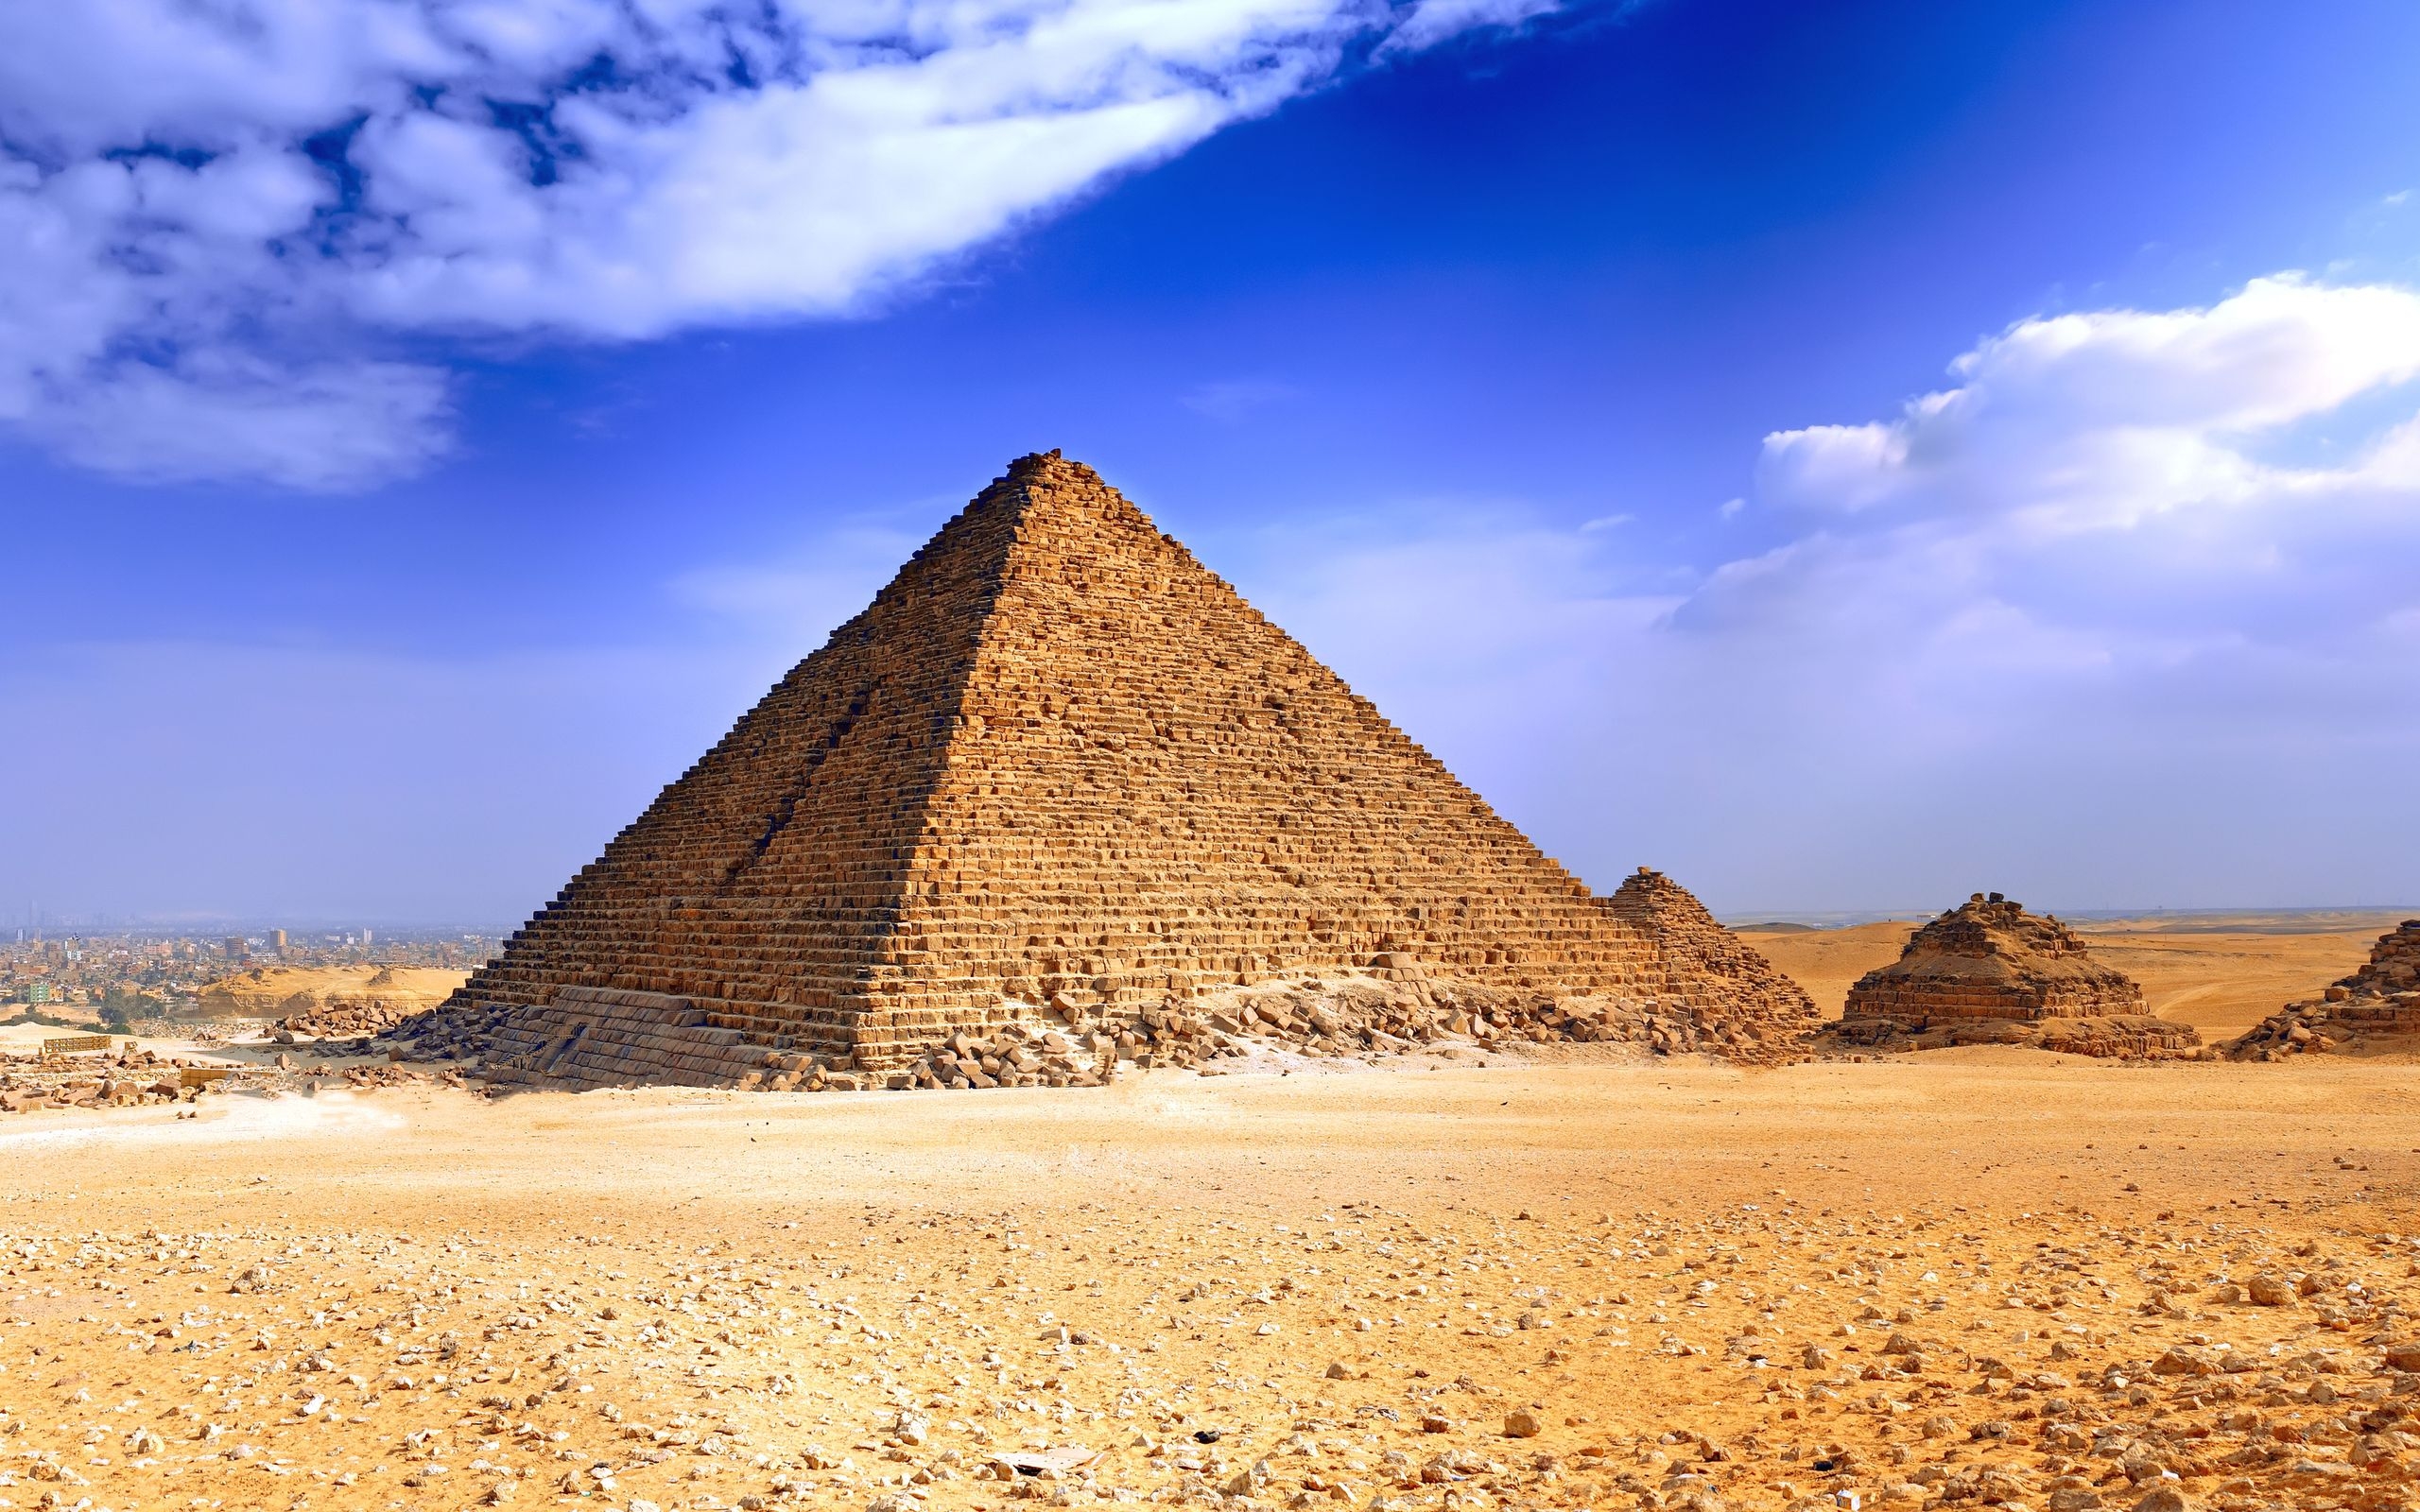 egypt, man made, pyramid, hdr